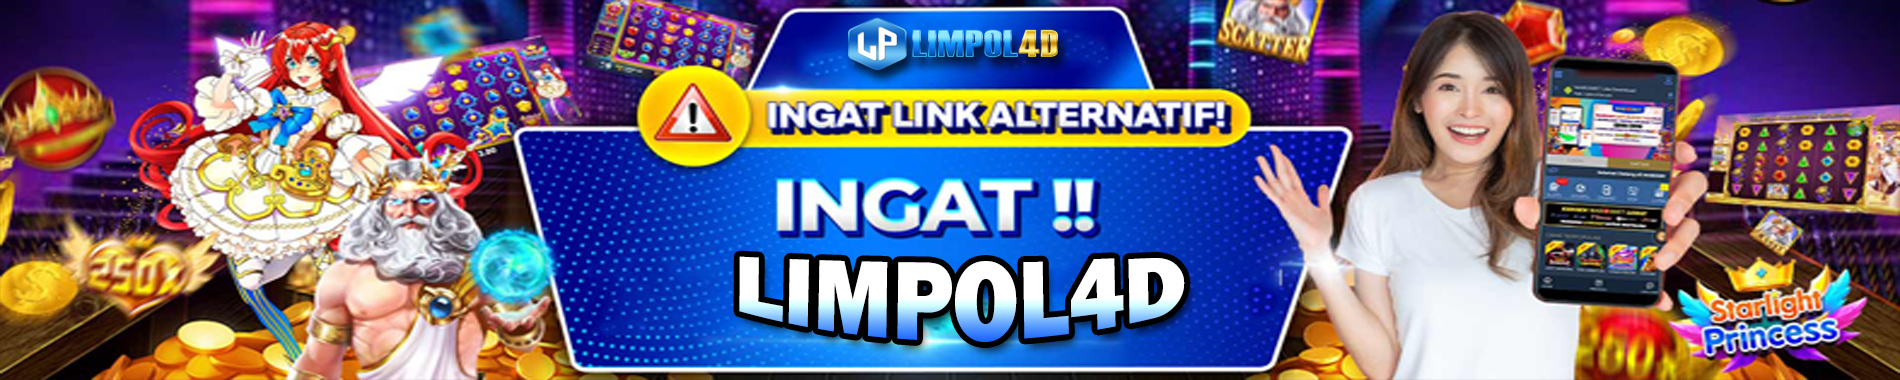 Link limpol4d